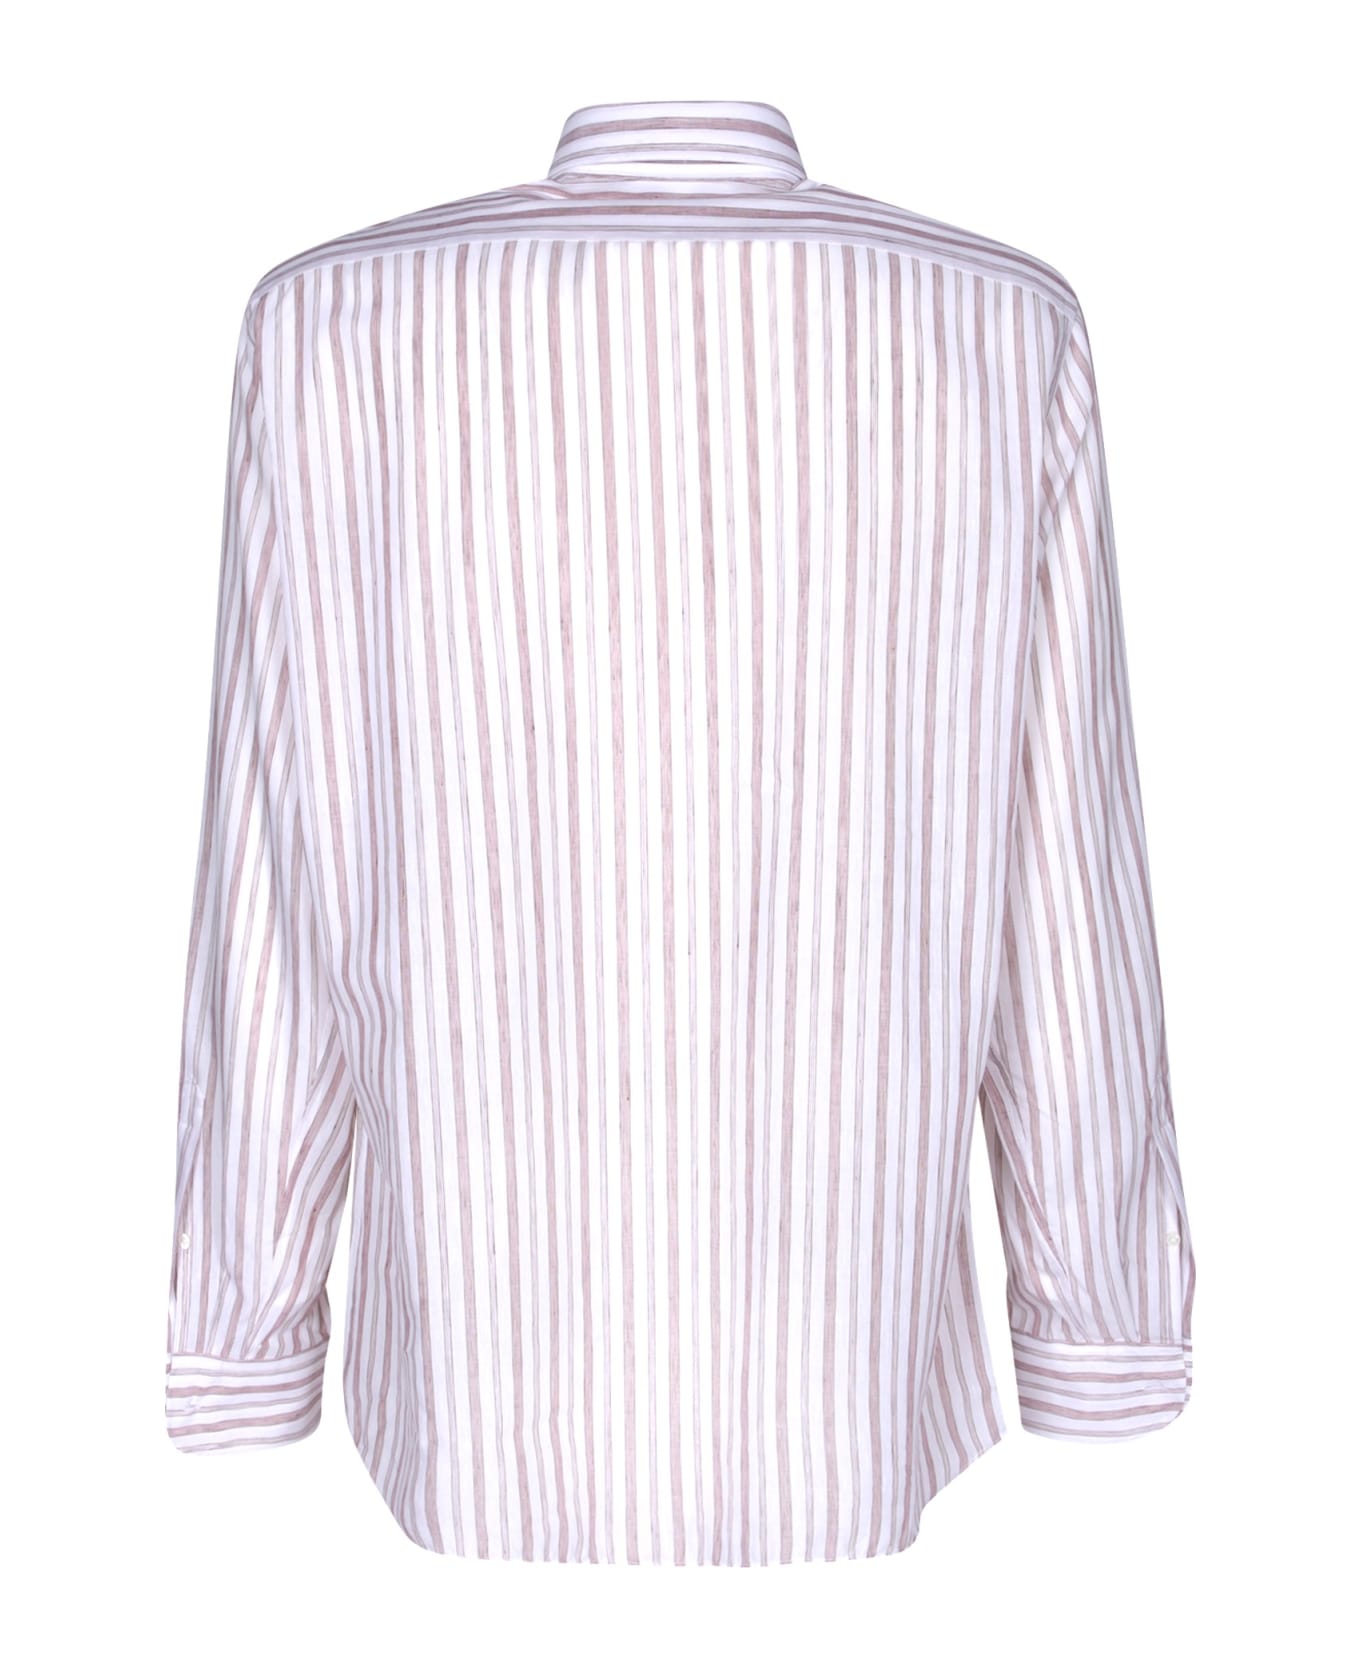 Lardini Ted Striped Brown/white Shirt - White